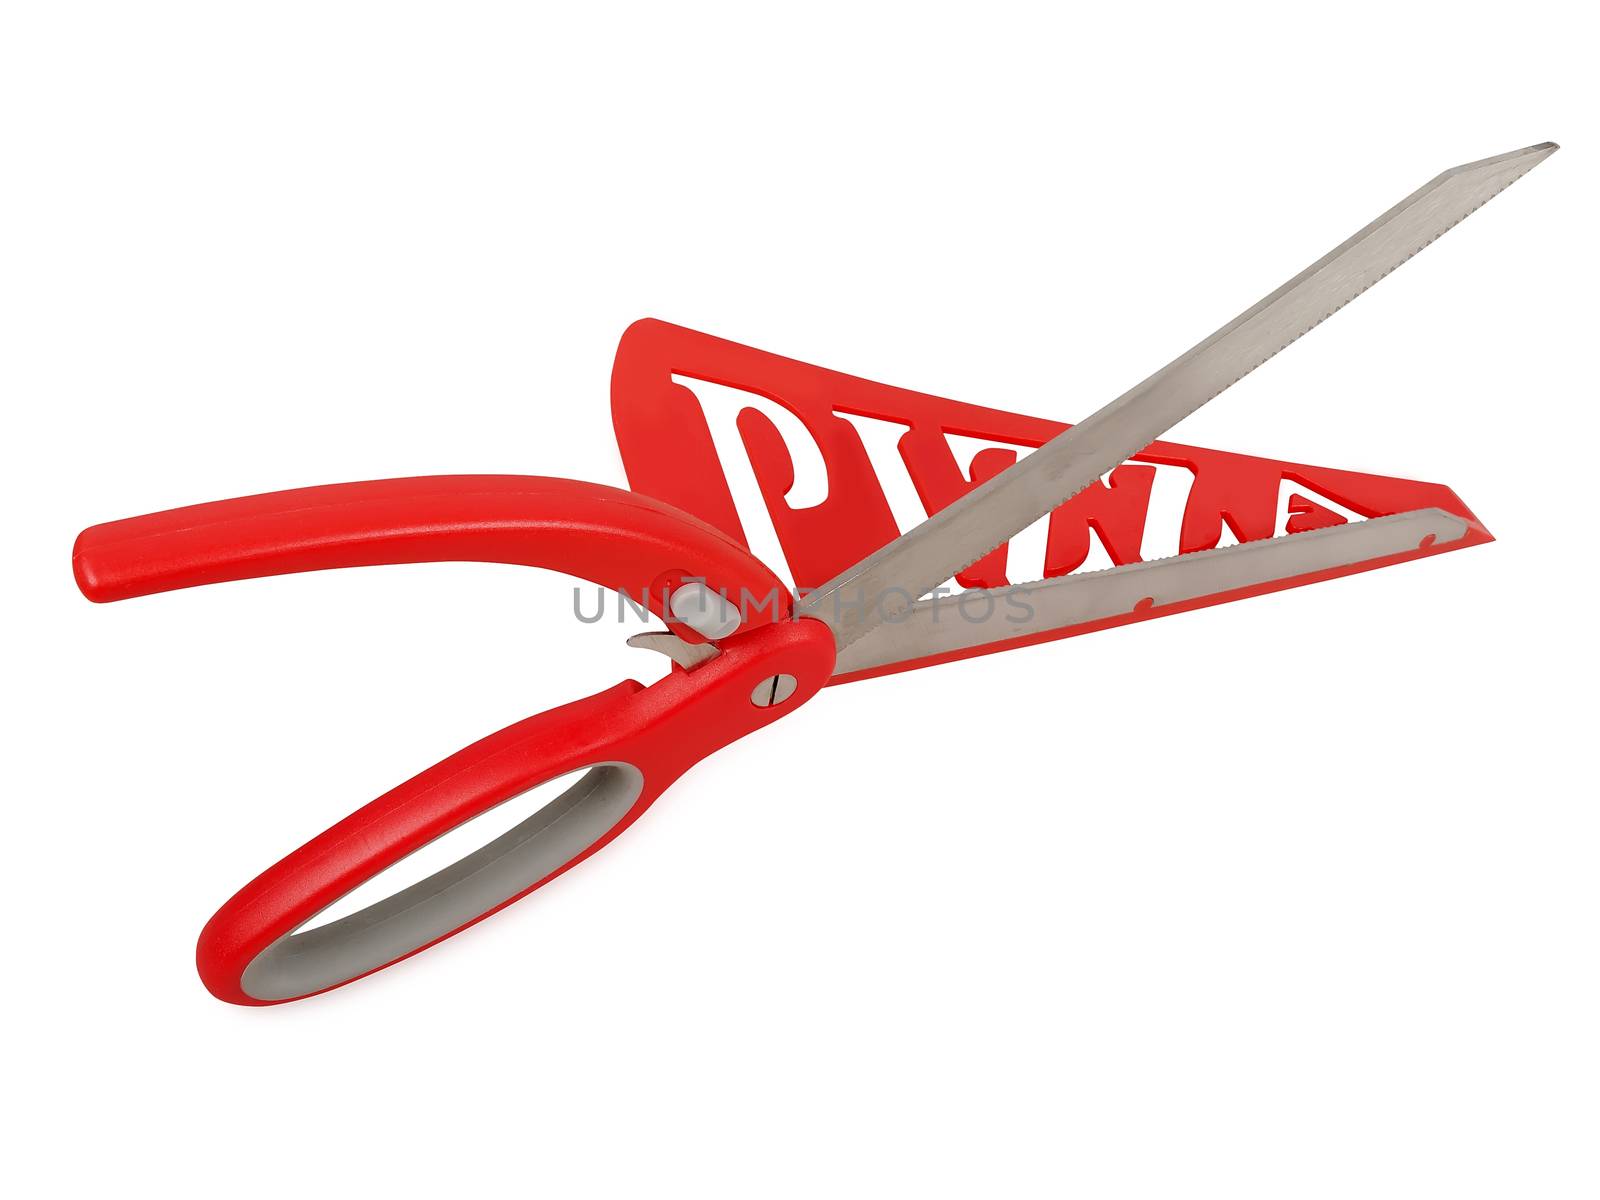 pizza scissors isolated on white background, studio shot     